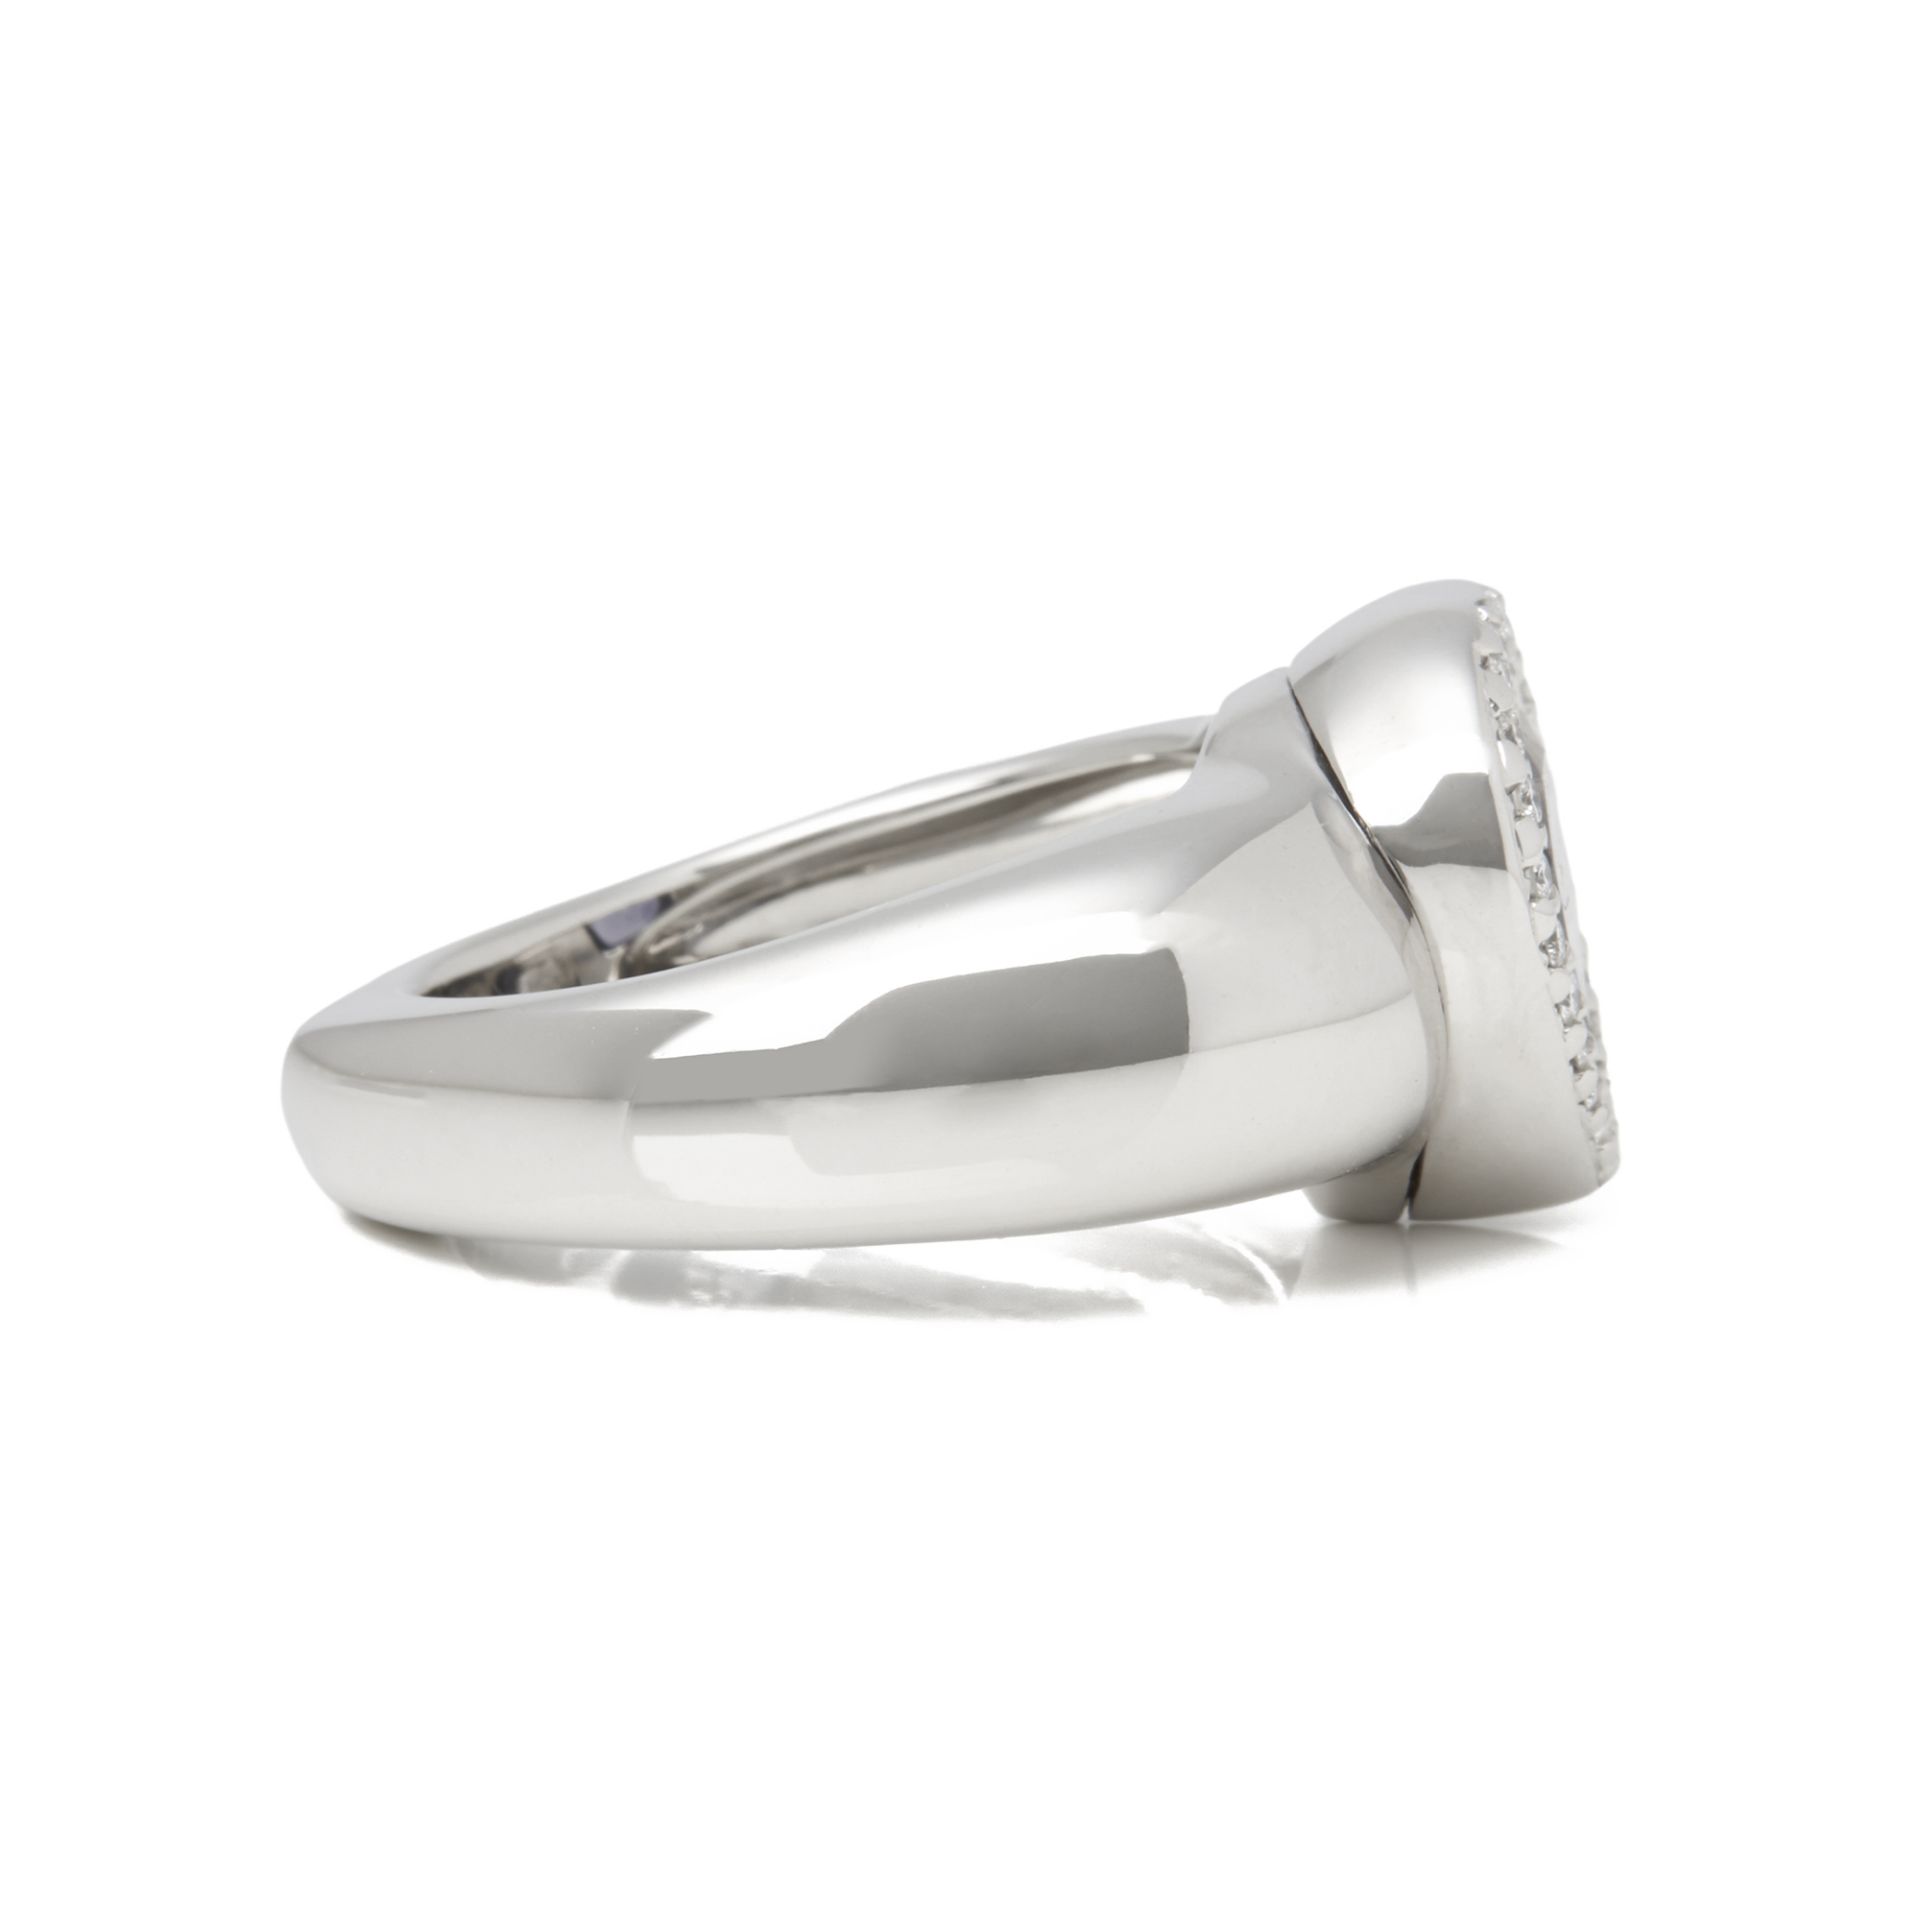 Piaget 18k White Gold Iolite & Diamond Heart Cocktail Ring - Image 7 of 7